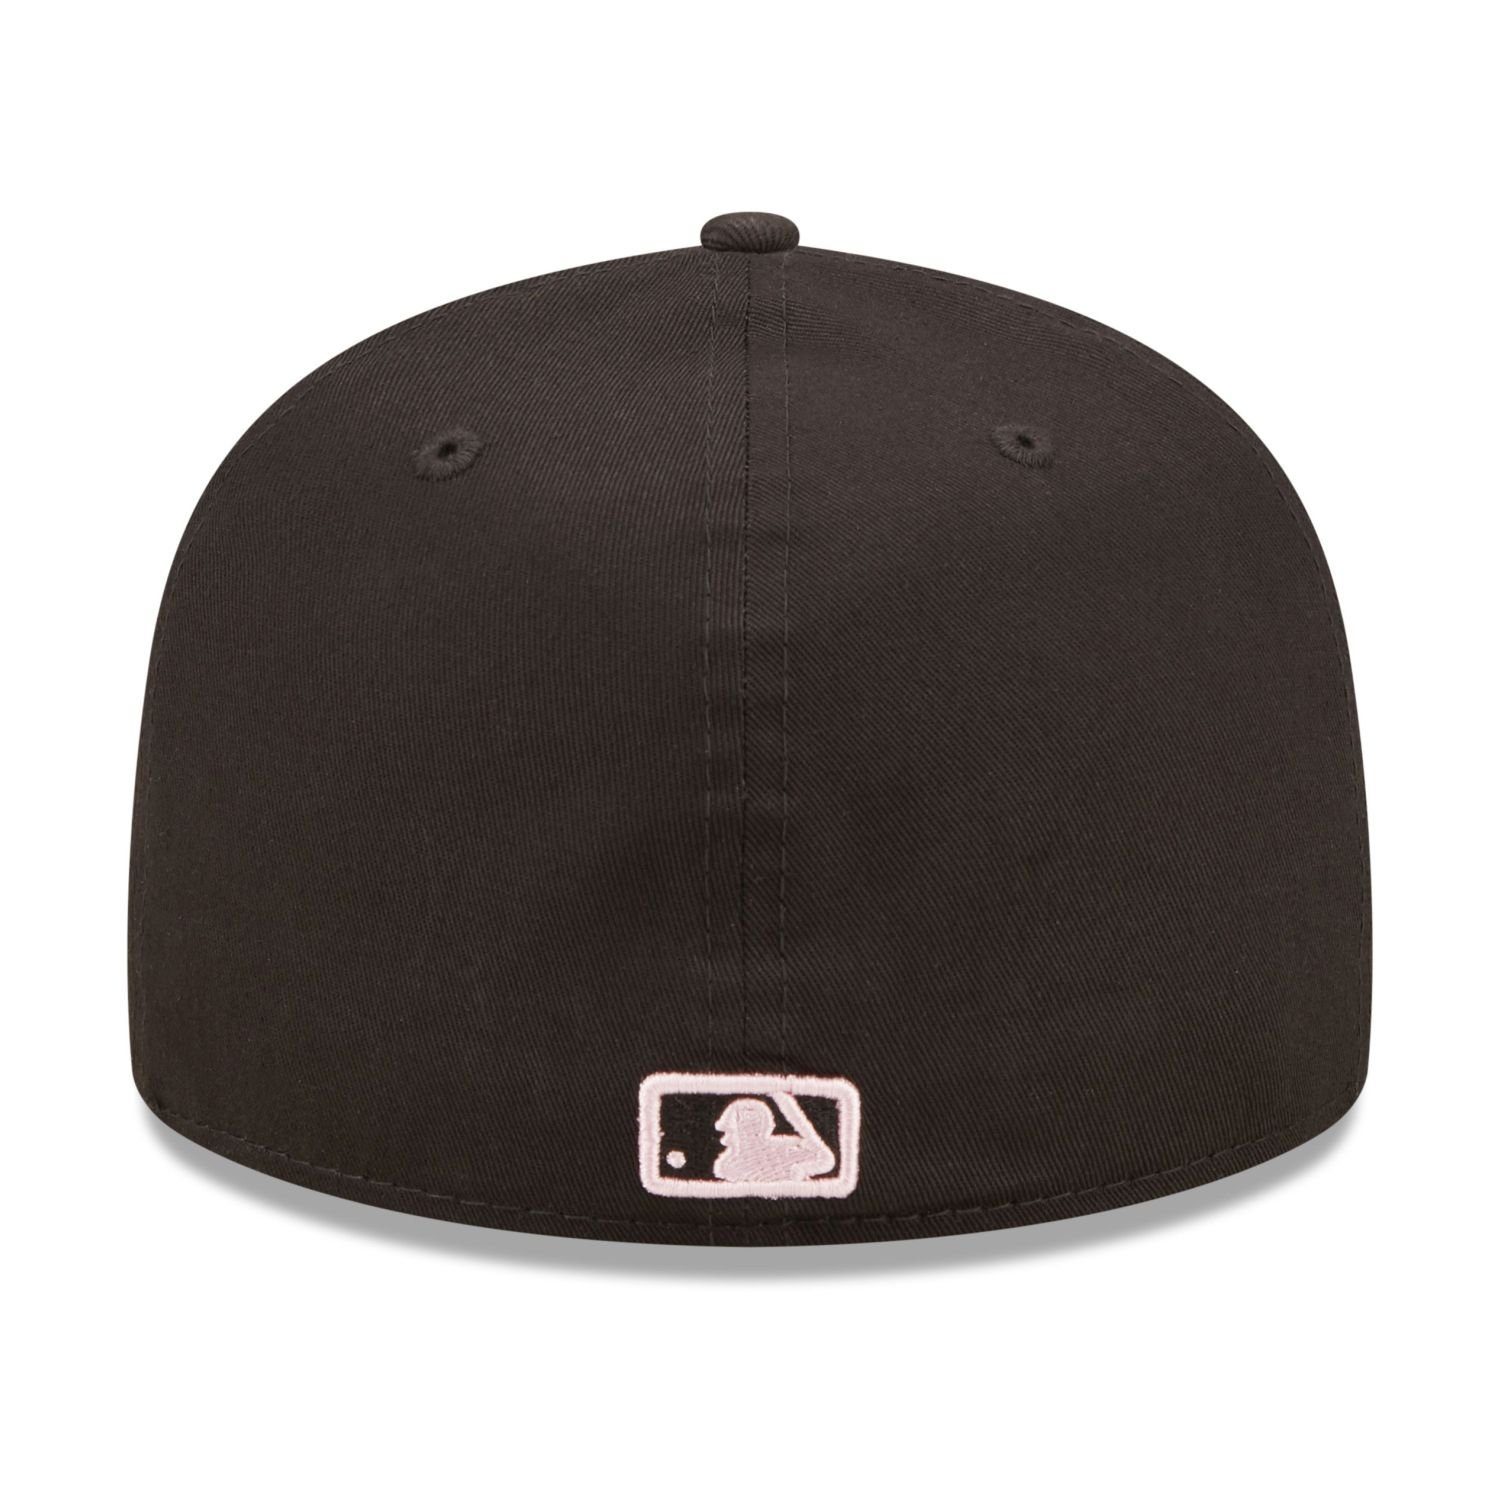 York 59Fifty Yankees New Era New Cap schwarz Fitted